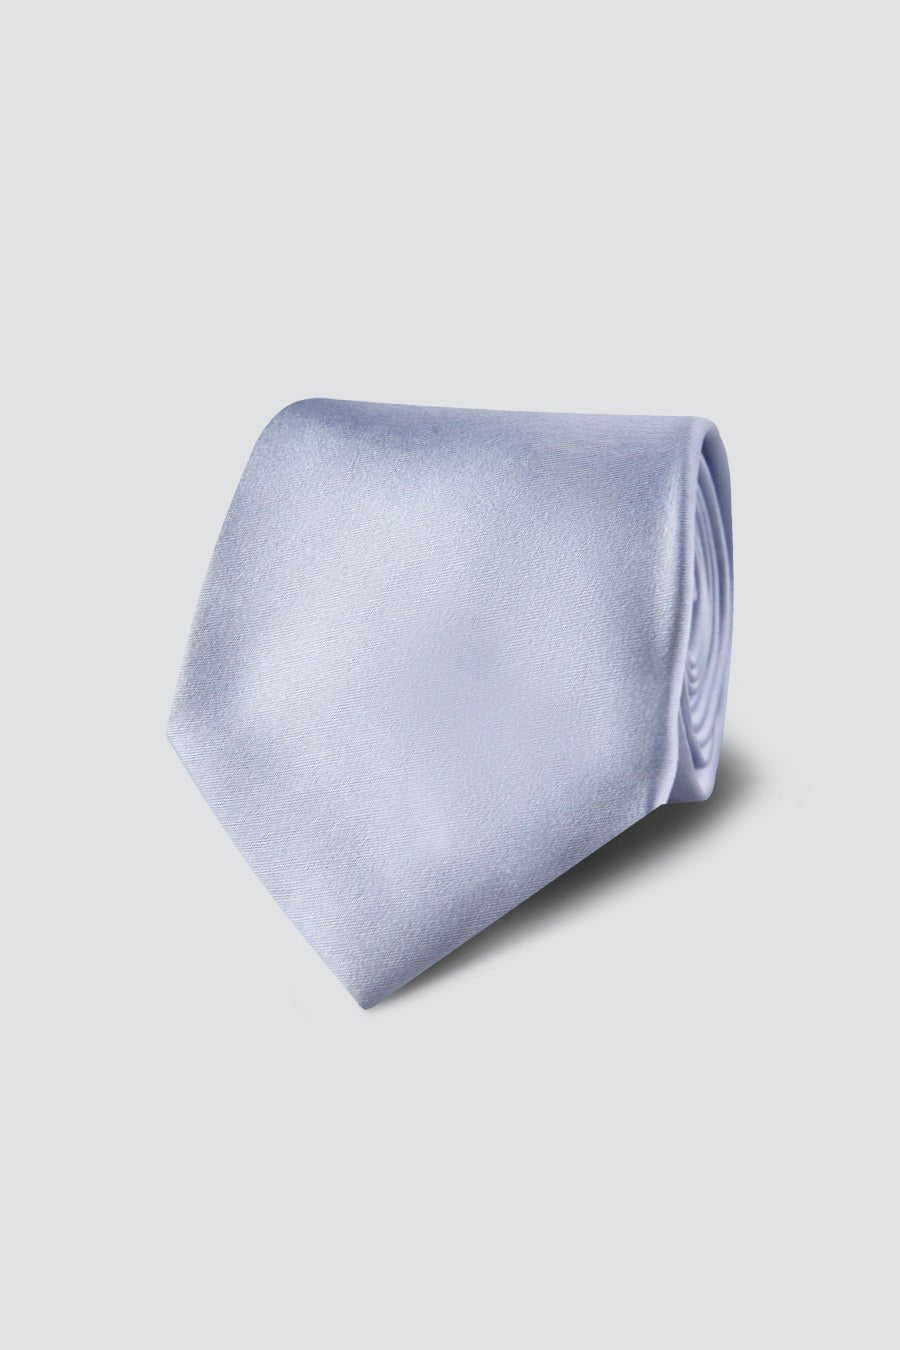 Tie - 100% Silk - Cloud Blue - Maids to Measure